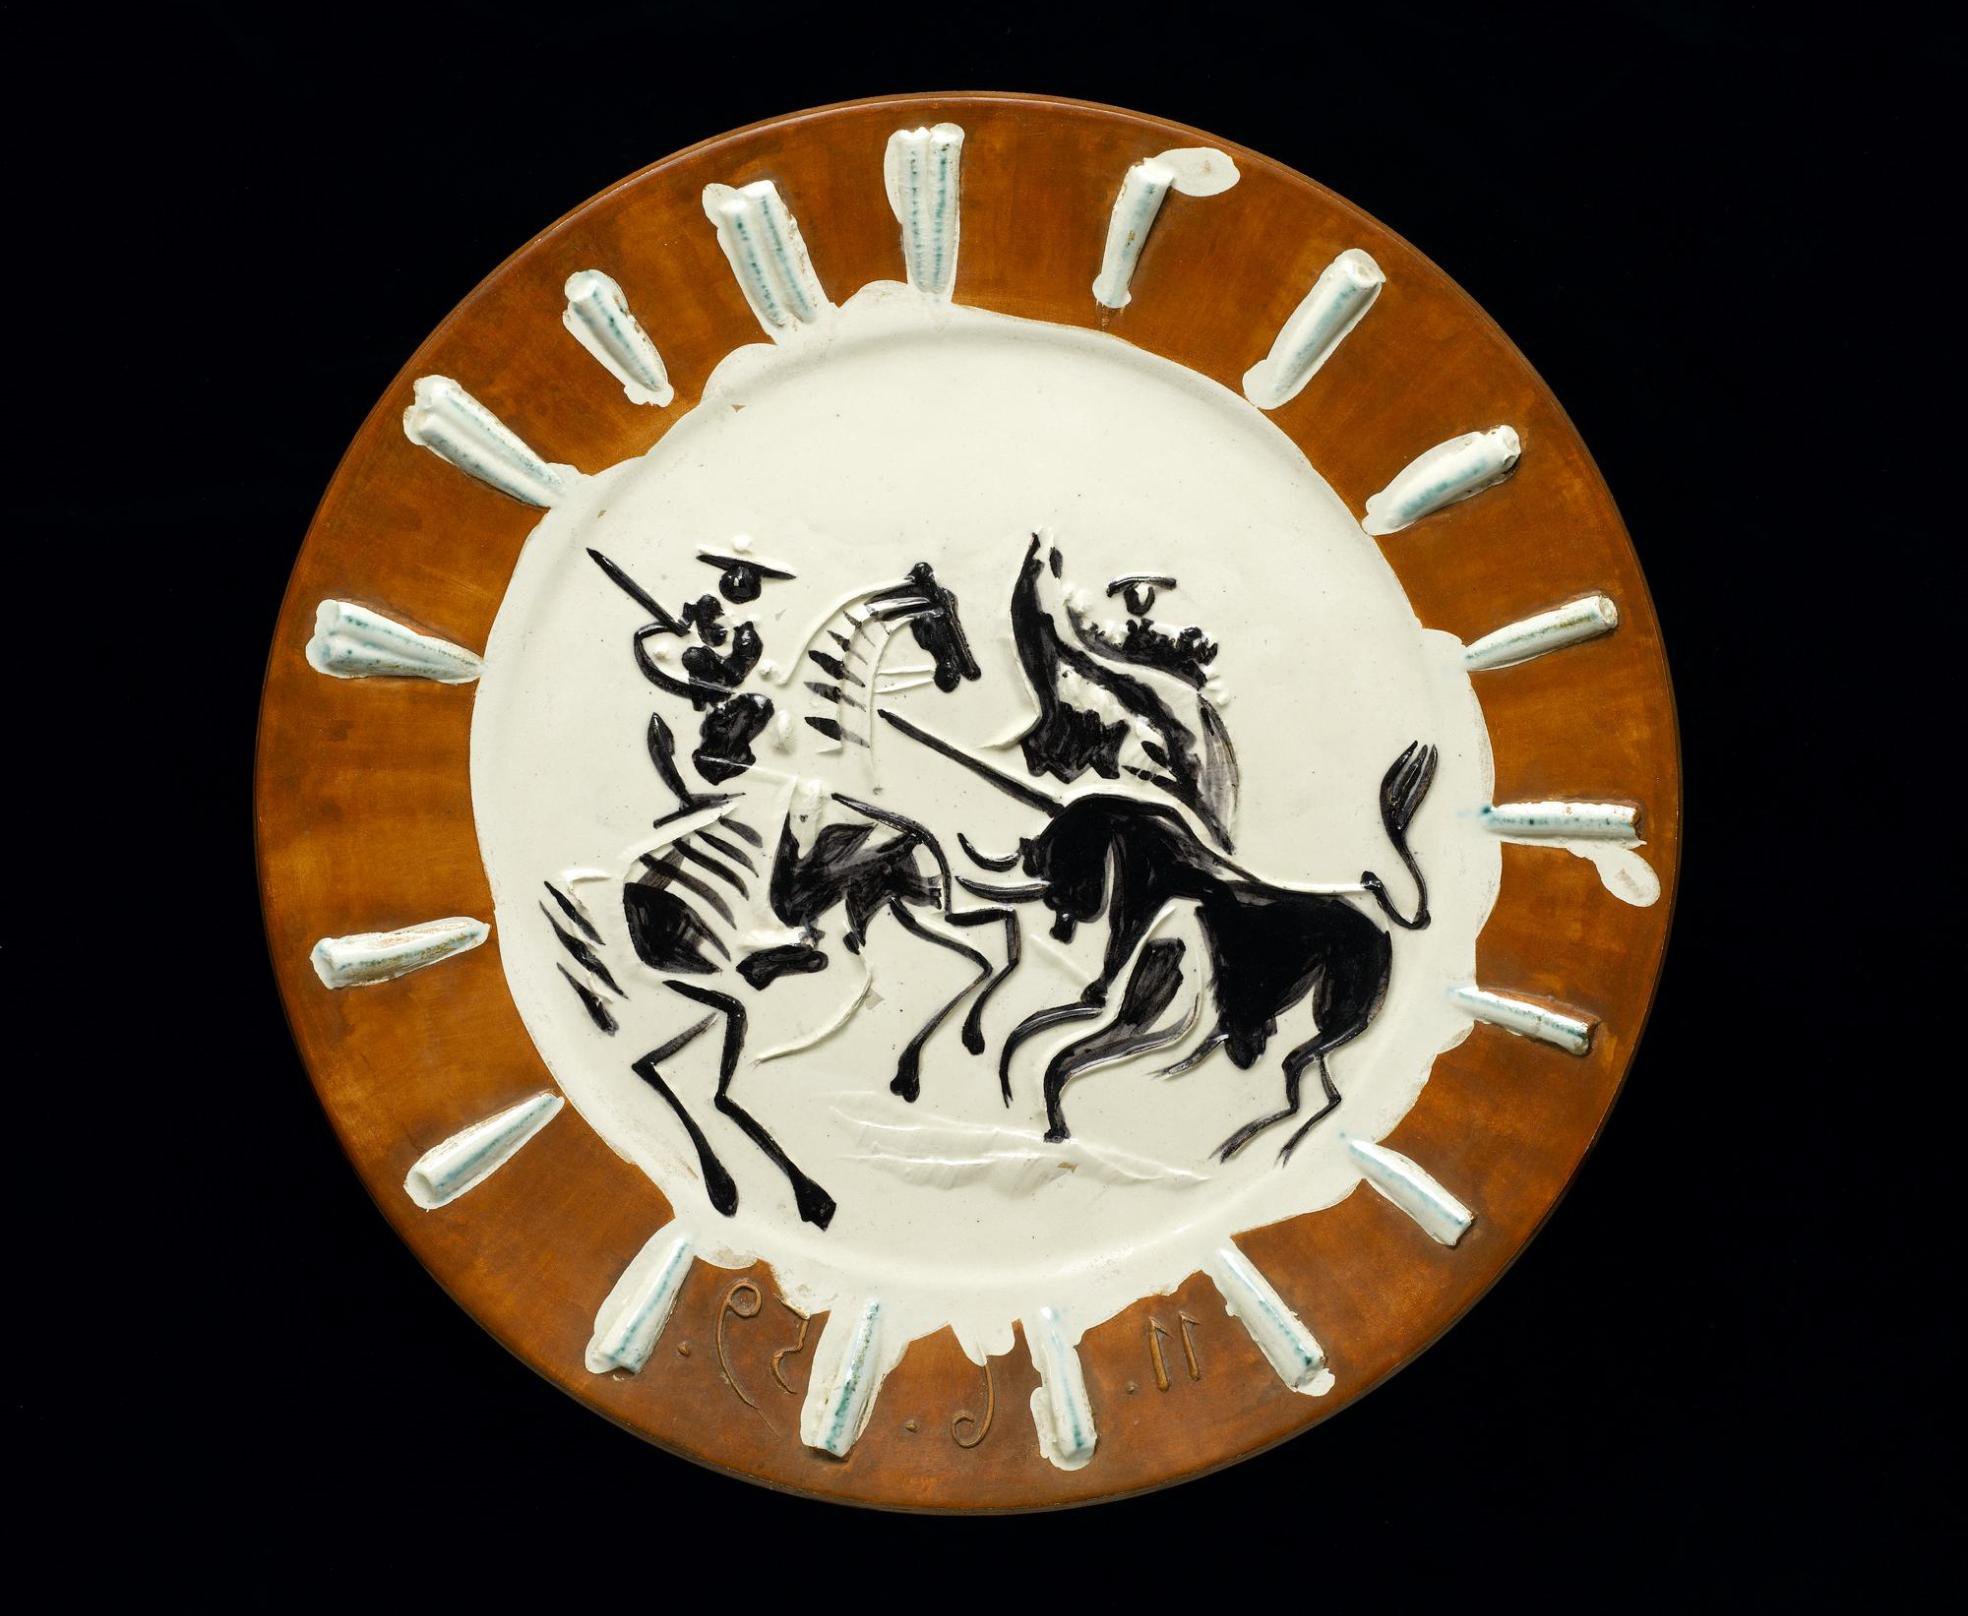 Ceramic dish entitled 'Scene de Tauromachie', designed by Pablo Picasso in the 1950s